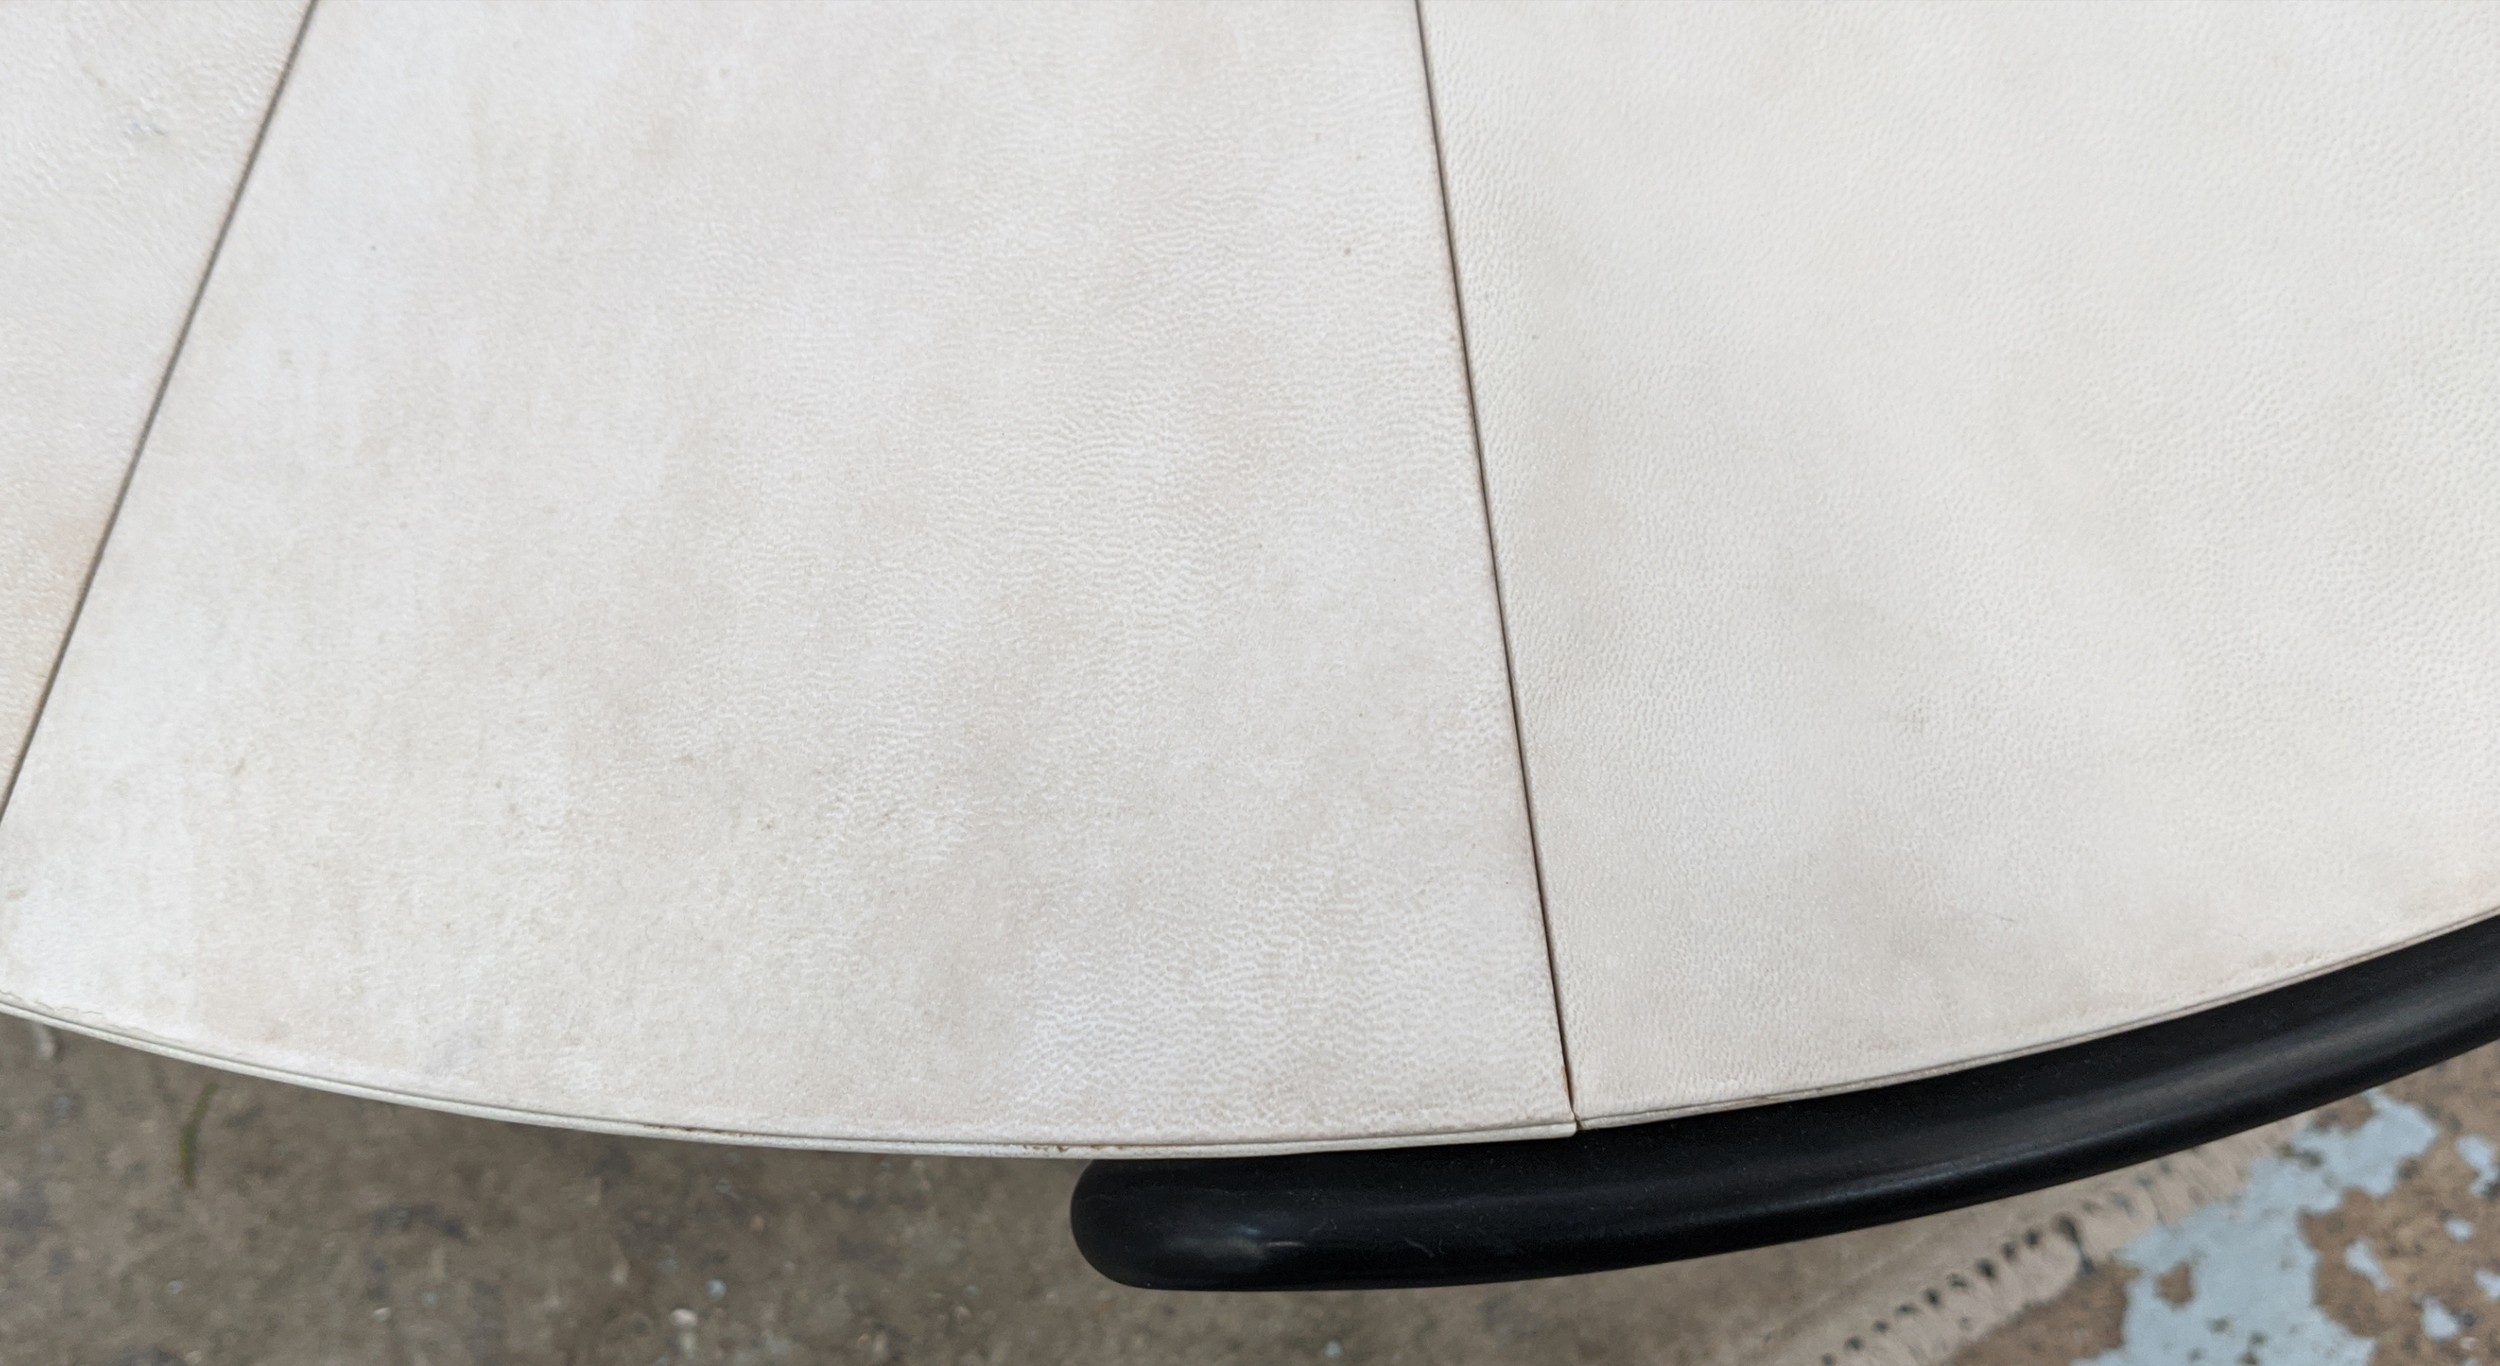 ARTERIORS MOSQUITO COFFEE TABLE, 99cm diam x 48cm. - Image 2 of 6